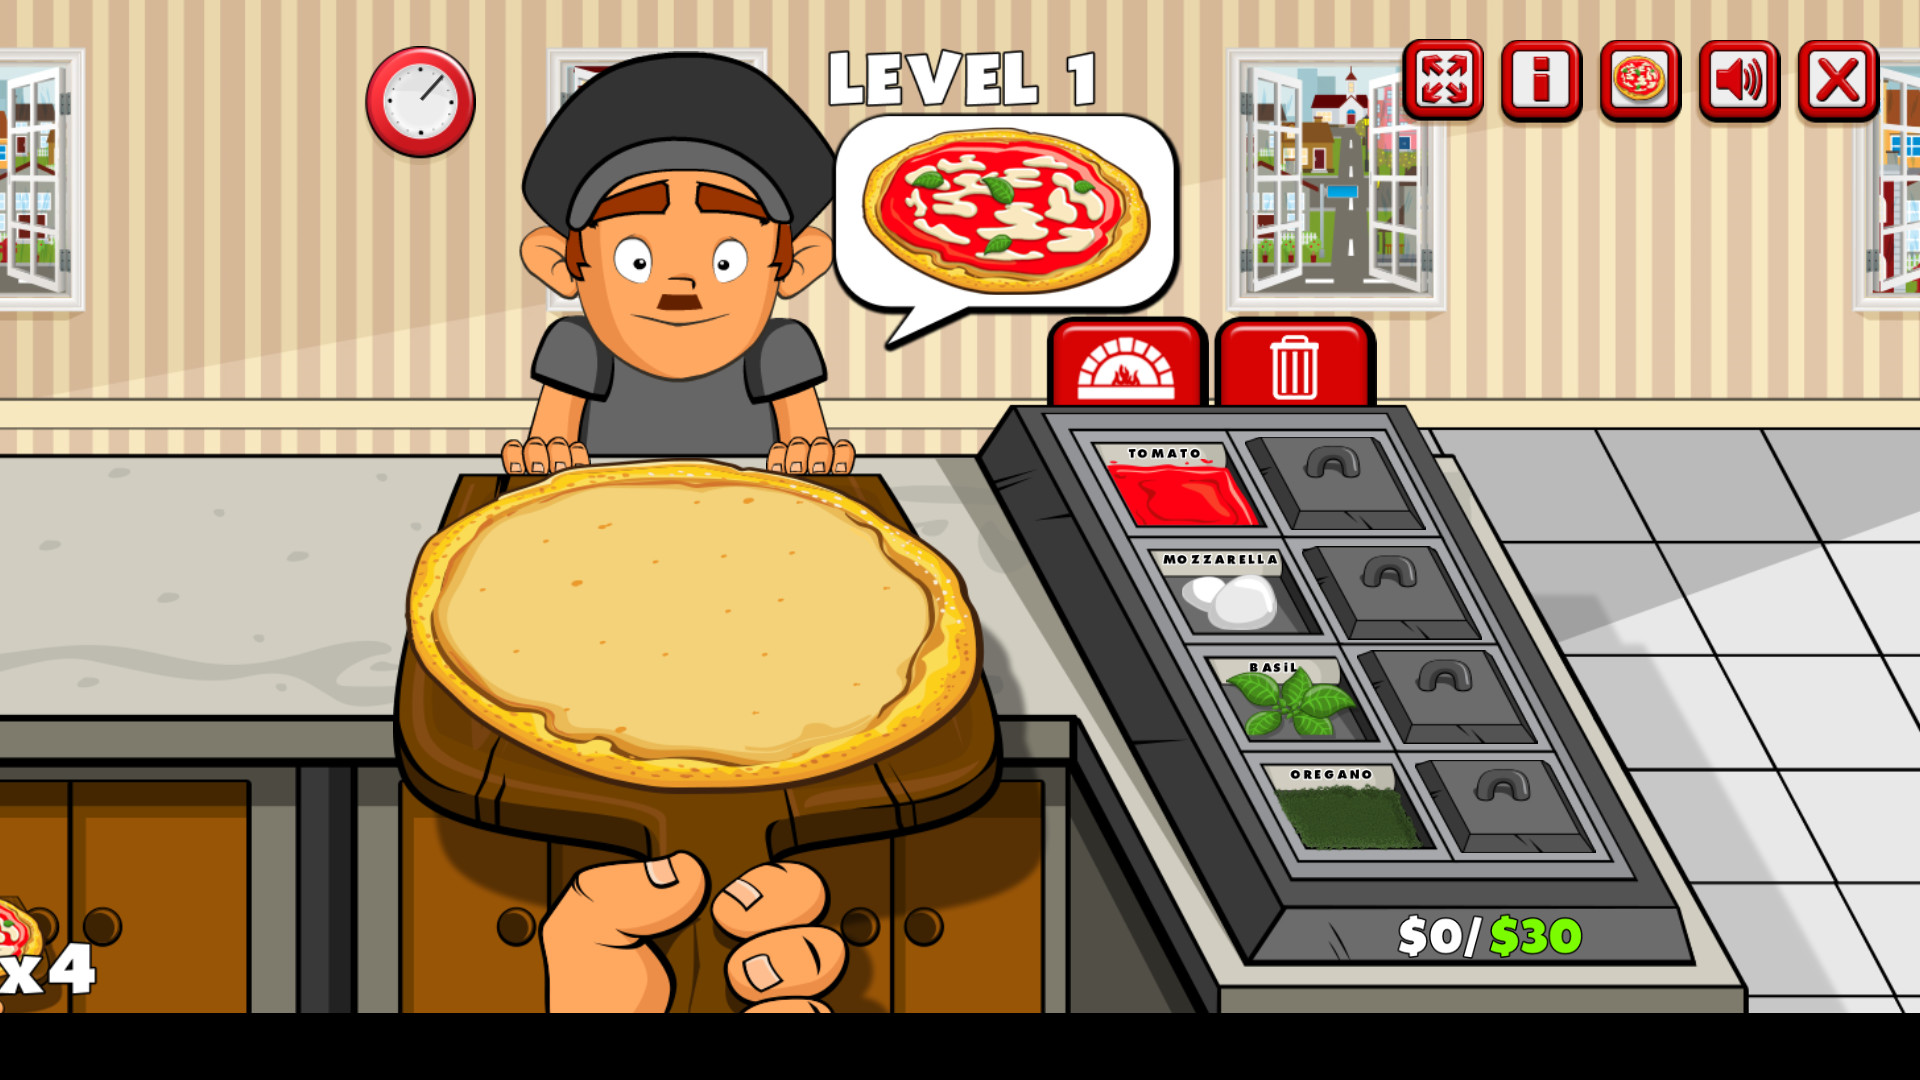 игра печь пиццу на андроид фото 108